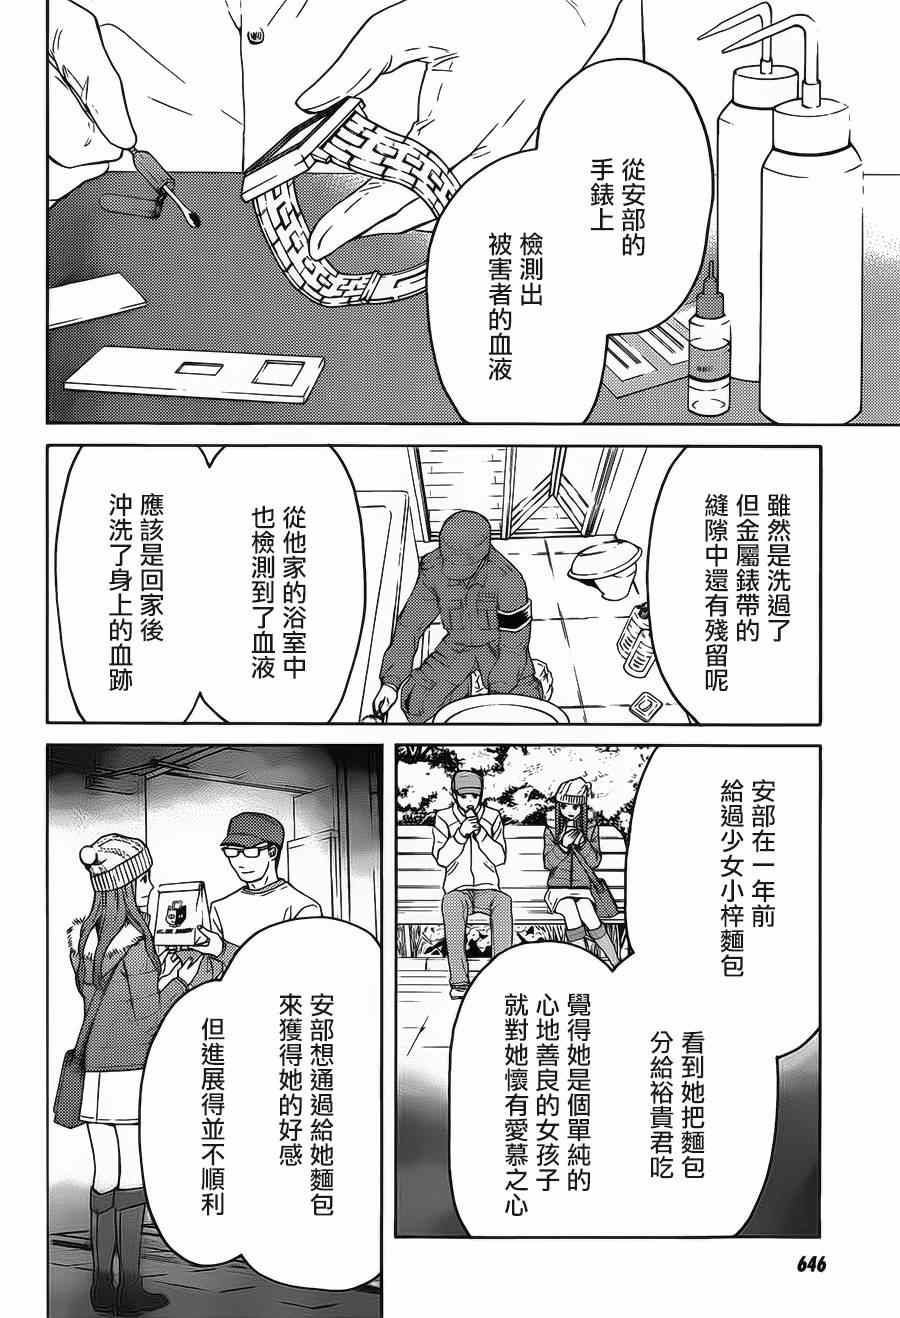 《BORDER临界者》漫画 006集